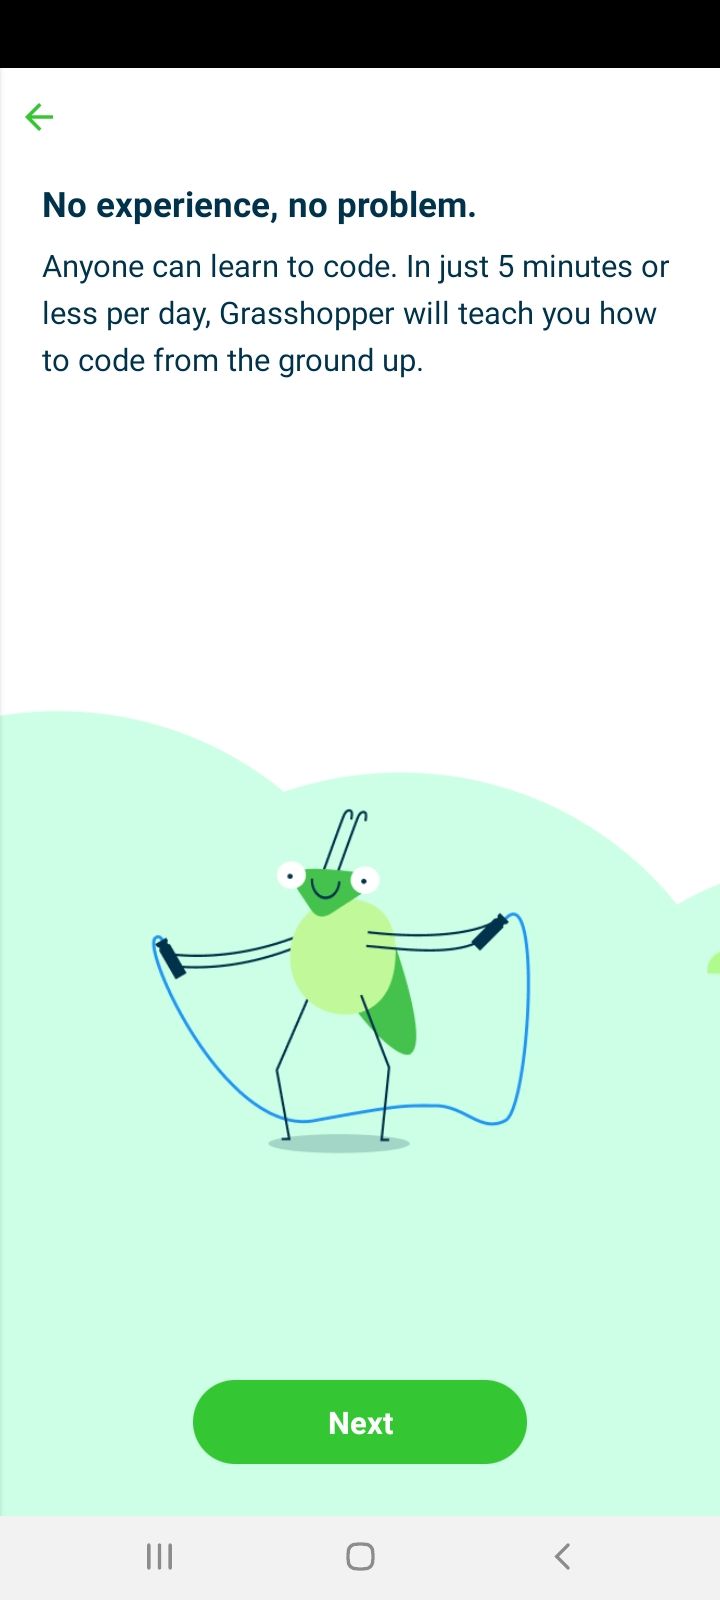 Grasshopper app introduction